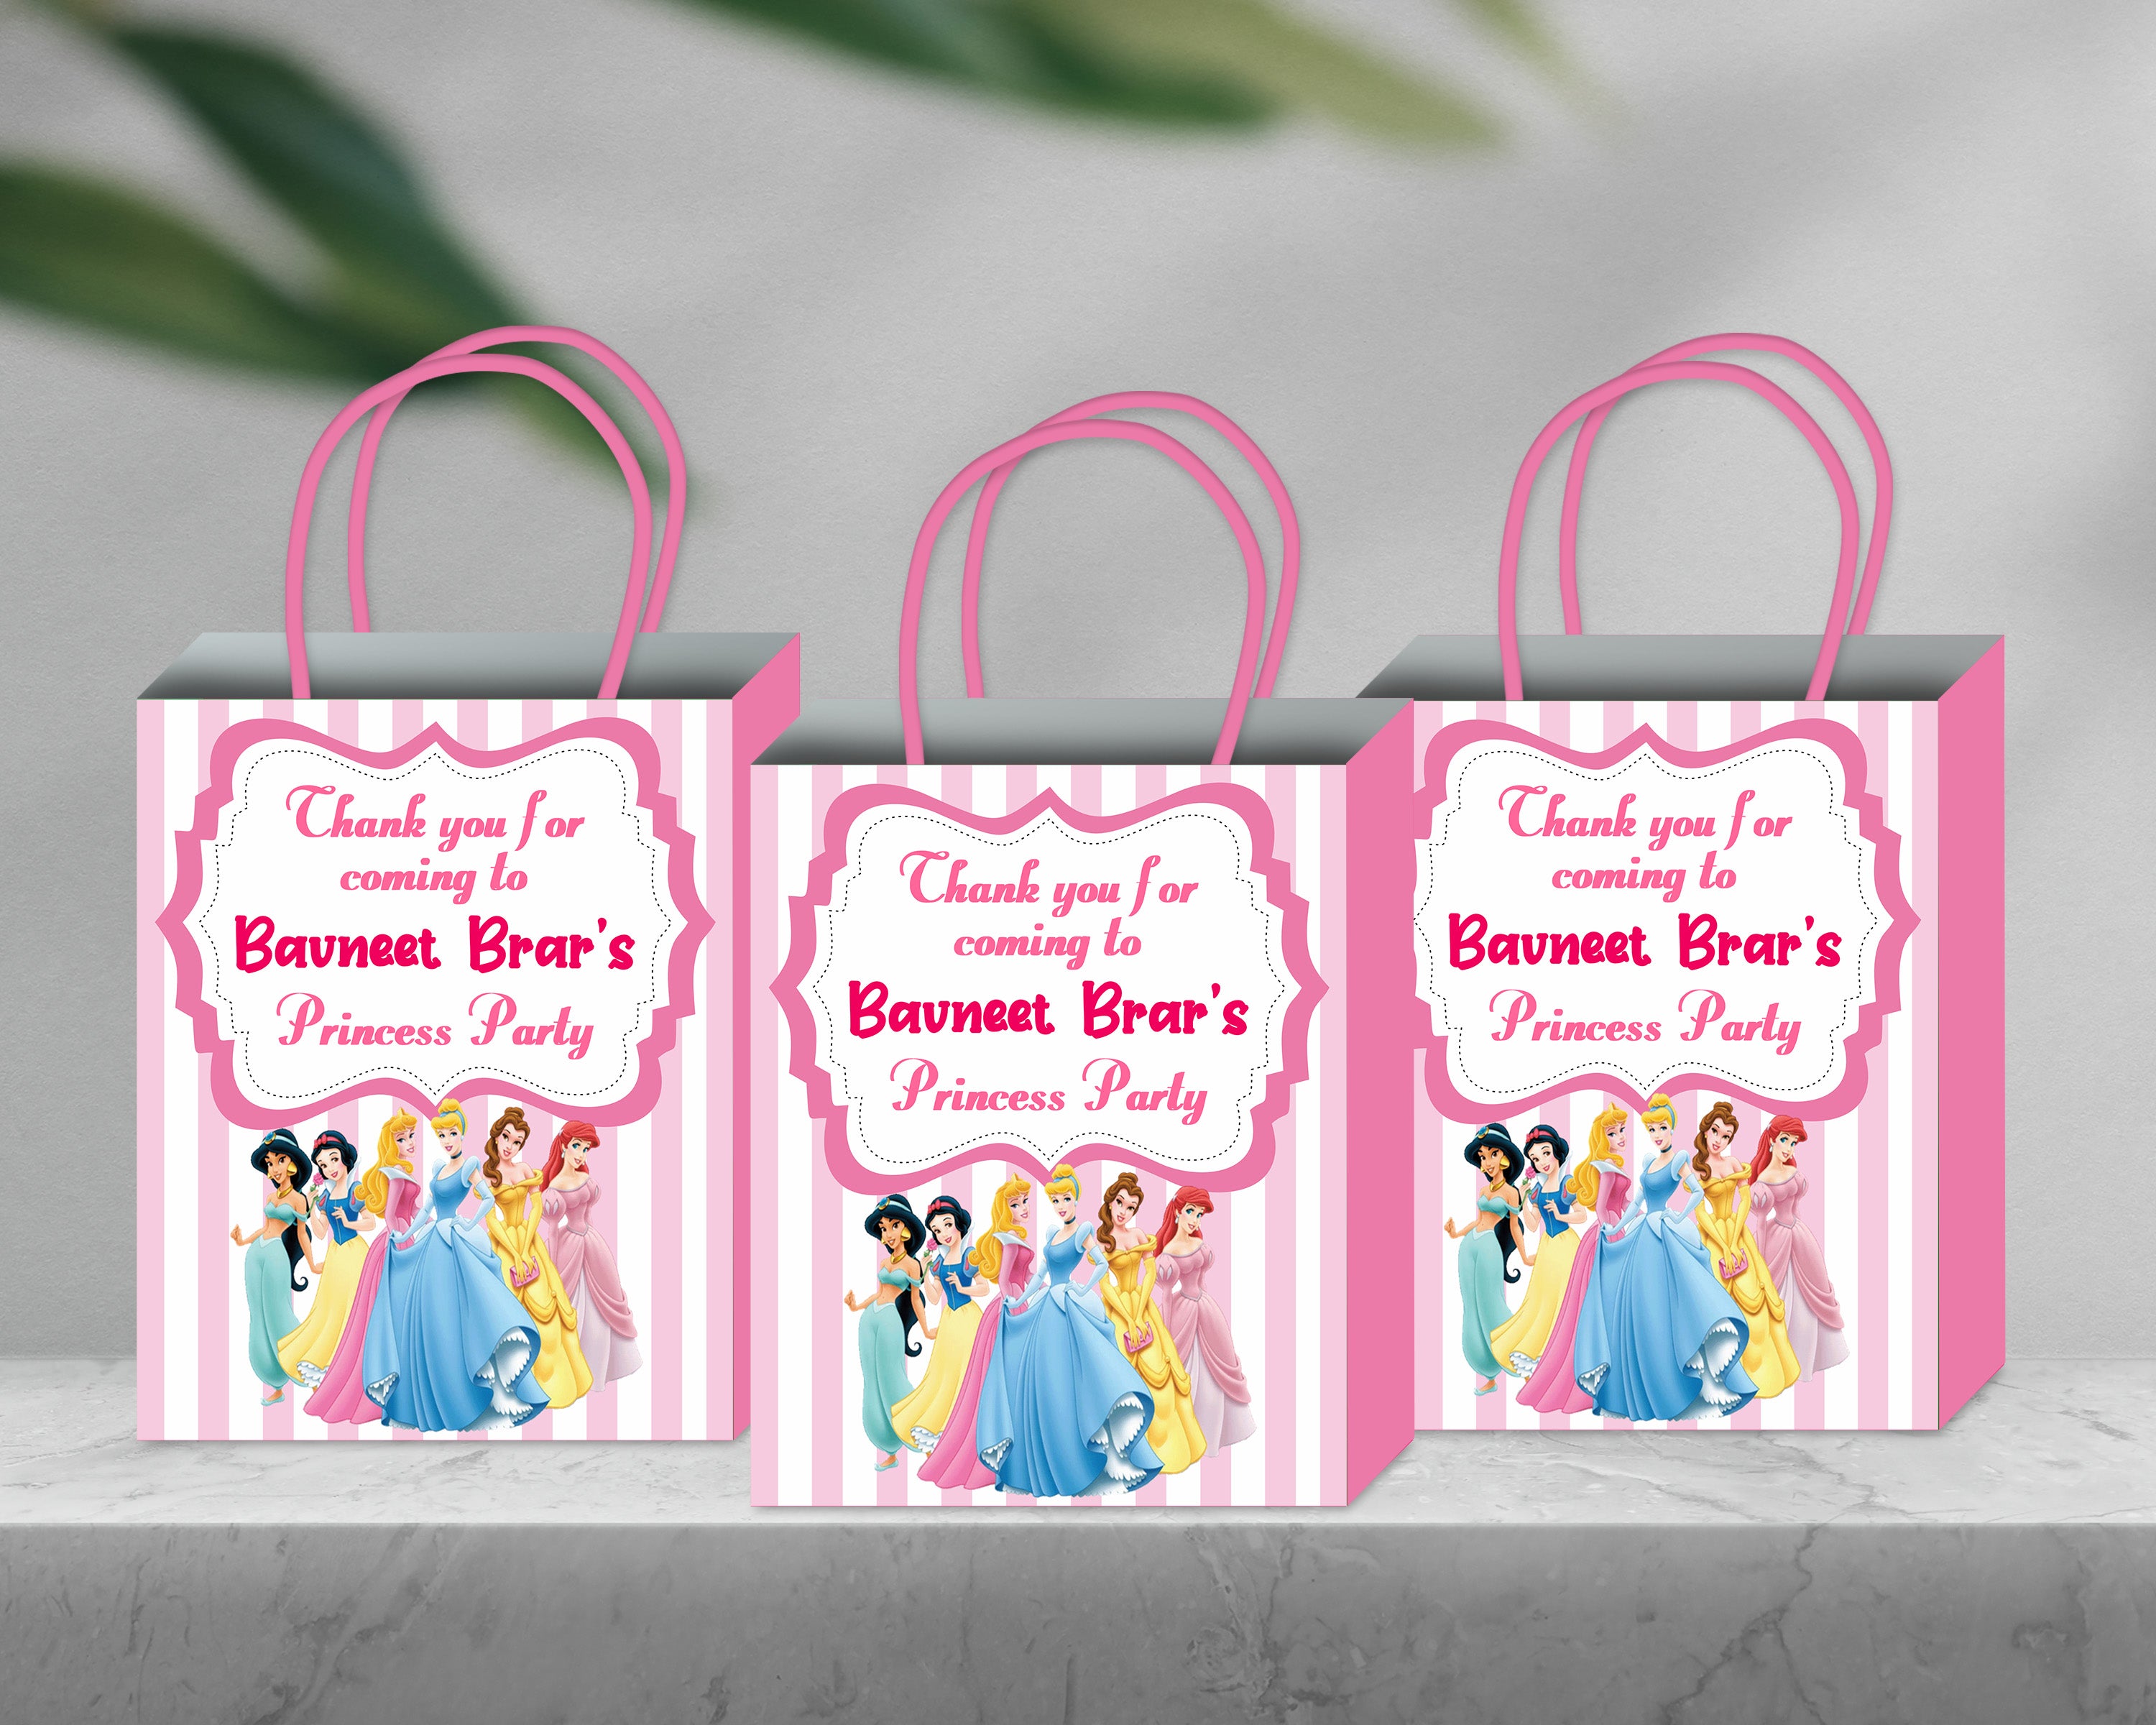 Thamboolam bags | Return Gift bags | Wedding Return Gifts | Wedding gift  bags, Cloth bags, Bags